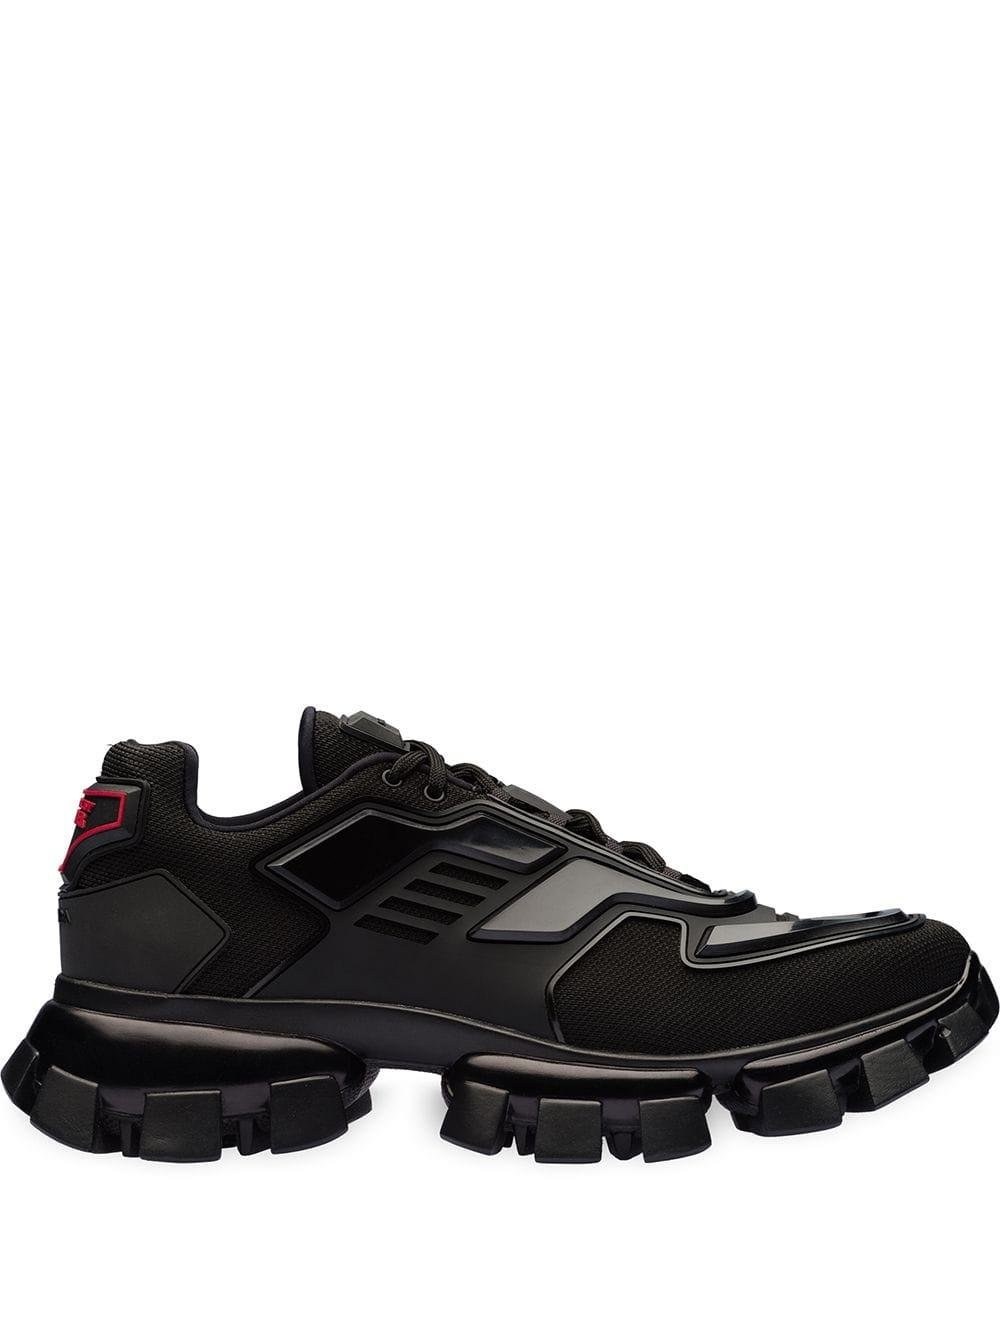 Prada Rubber Cloudbust Thunder Sneakers in Black for Men - Save 11% - Lyst